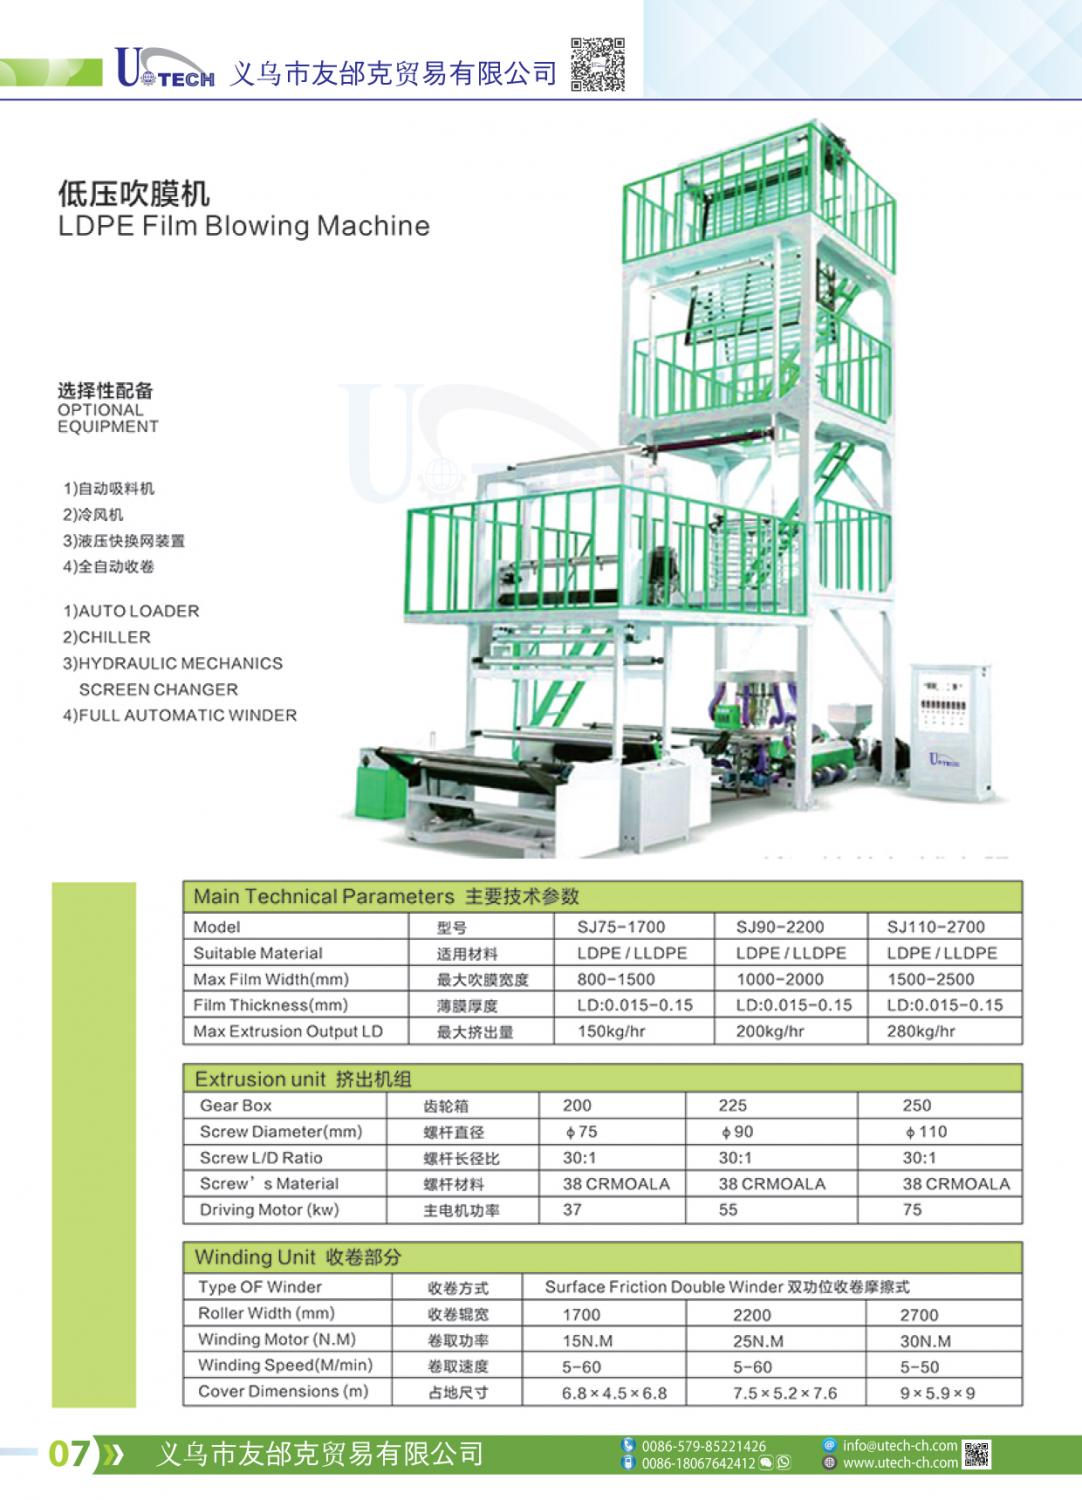 - LDPE Film Blowing Machine	